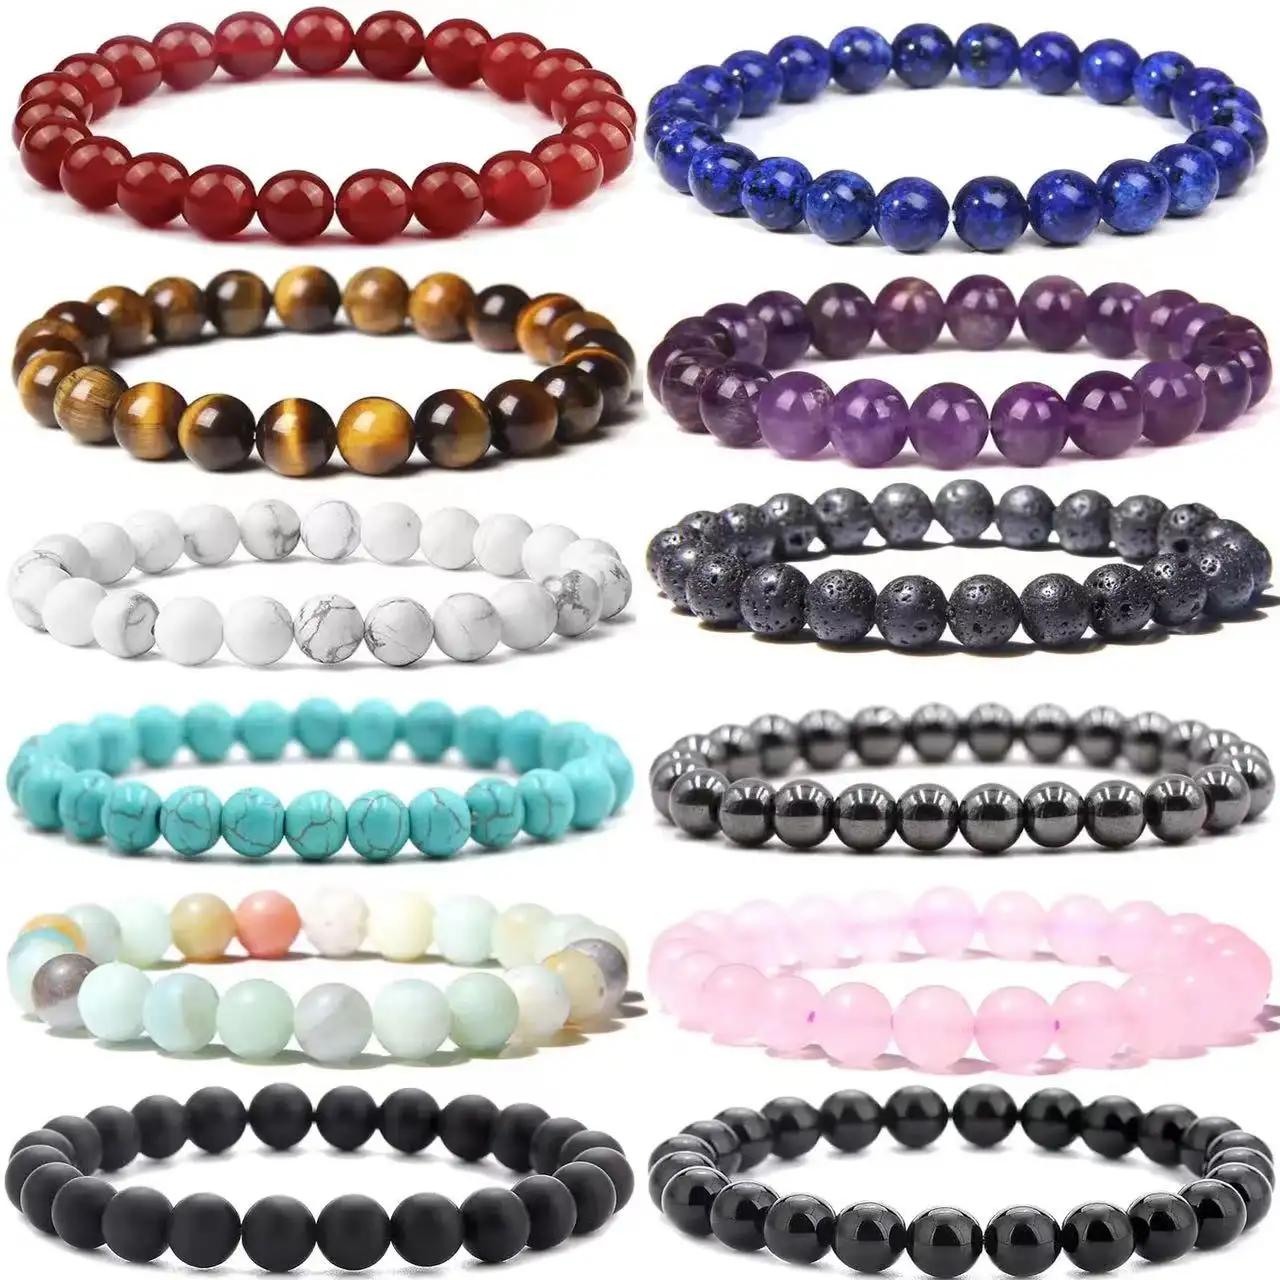 Wholesale Natural Stone Quartz Crystal Beads Bracelets 6mm 8mm 10mm Crystal Beads Handmade Gemstone Bracelets for Women and Men